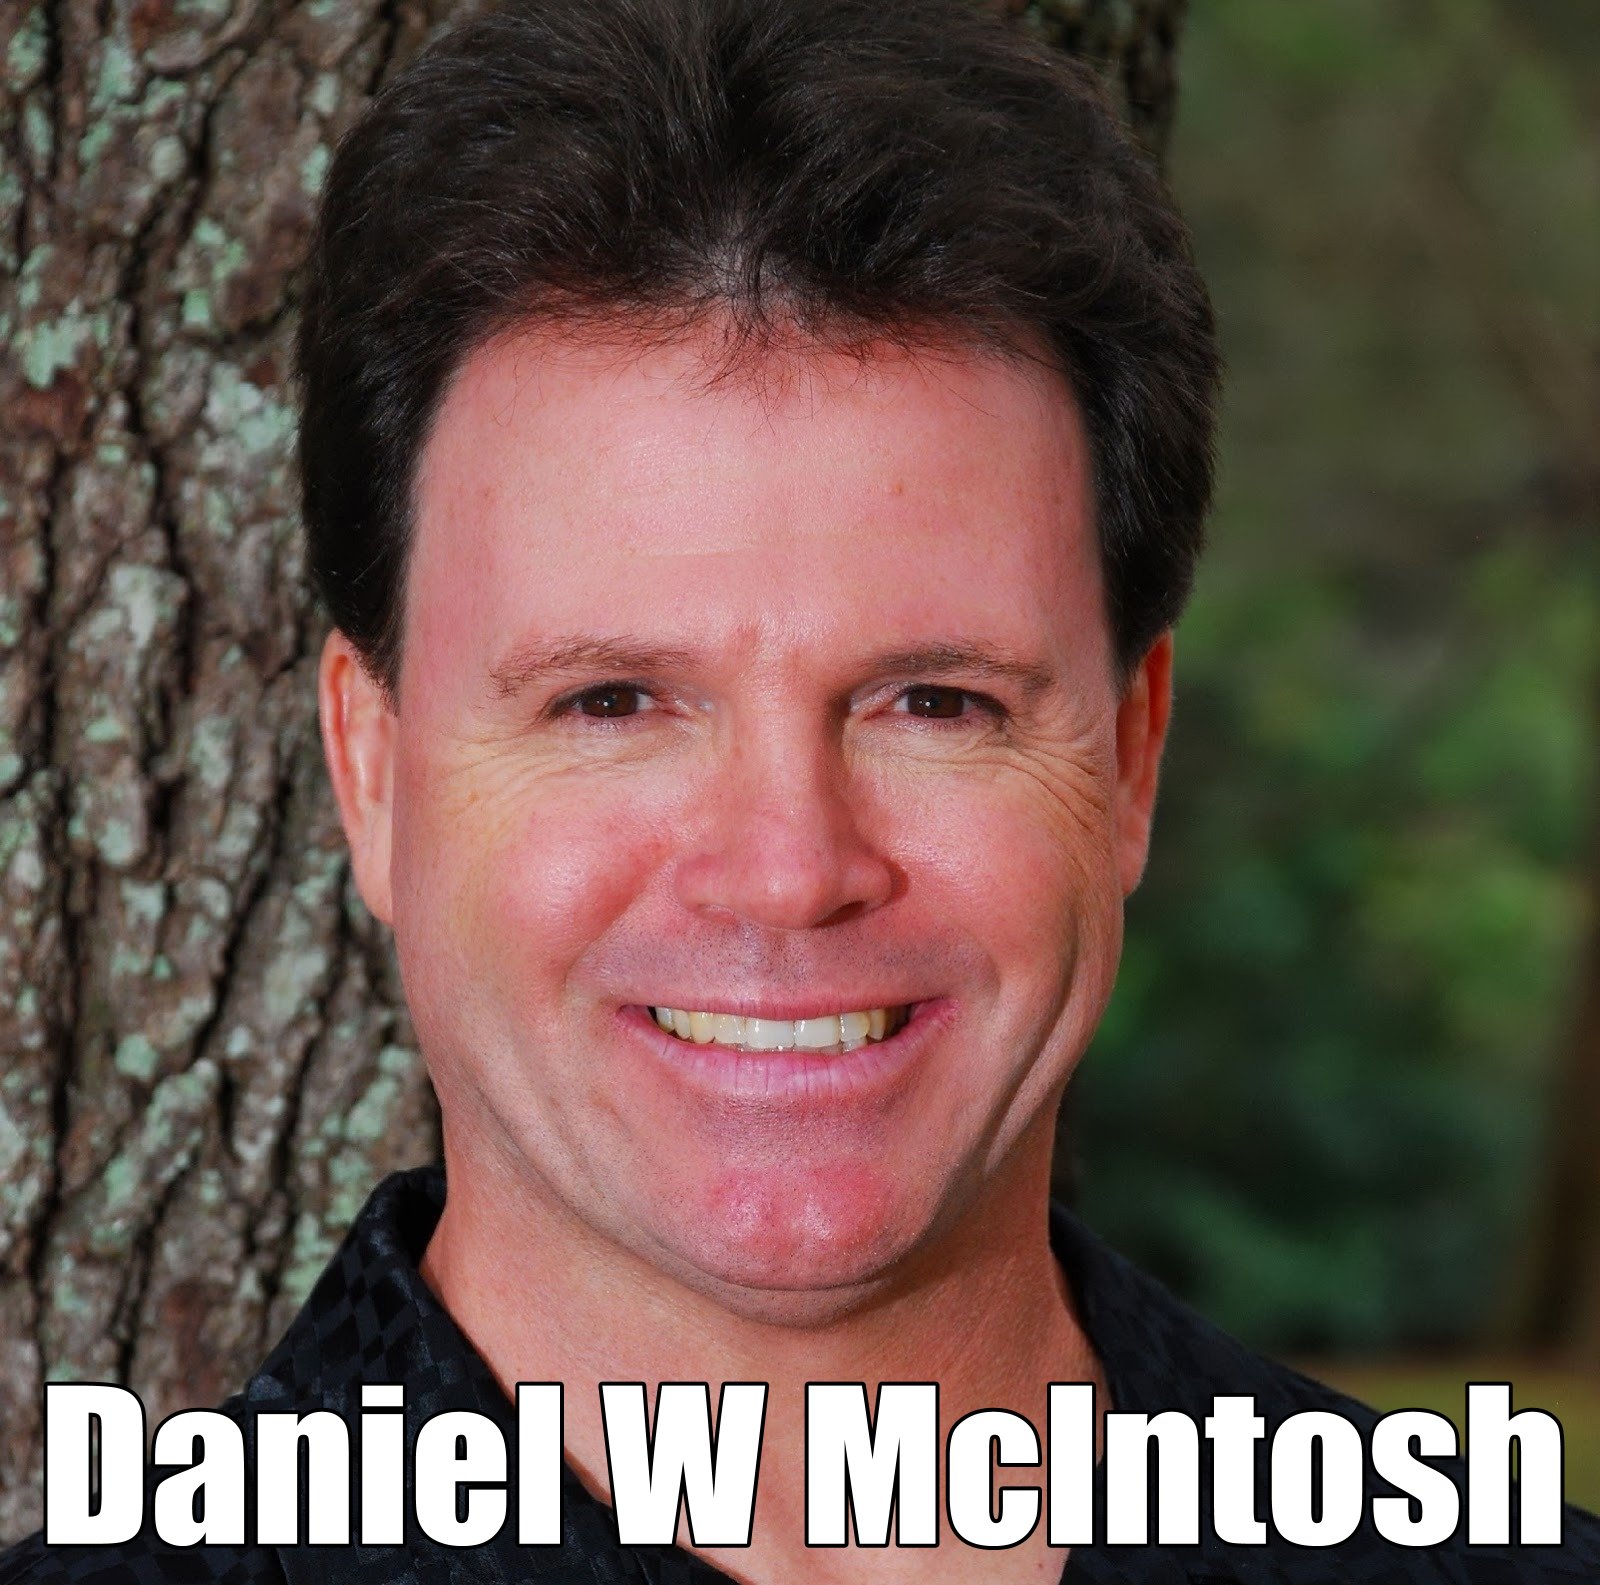 Daniel W McIntosh Actor/Stunt performer/Professional Juggler